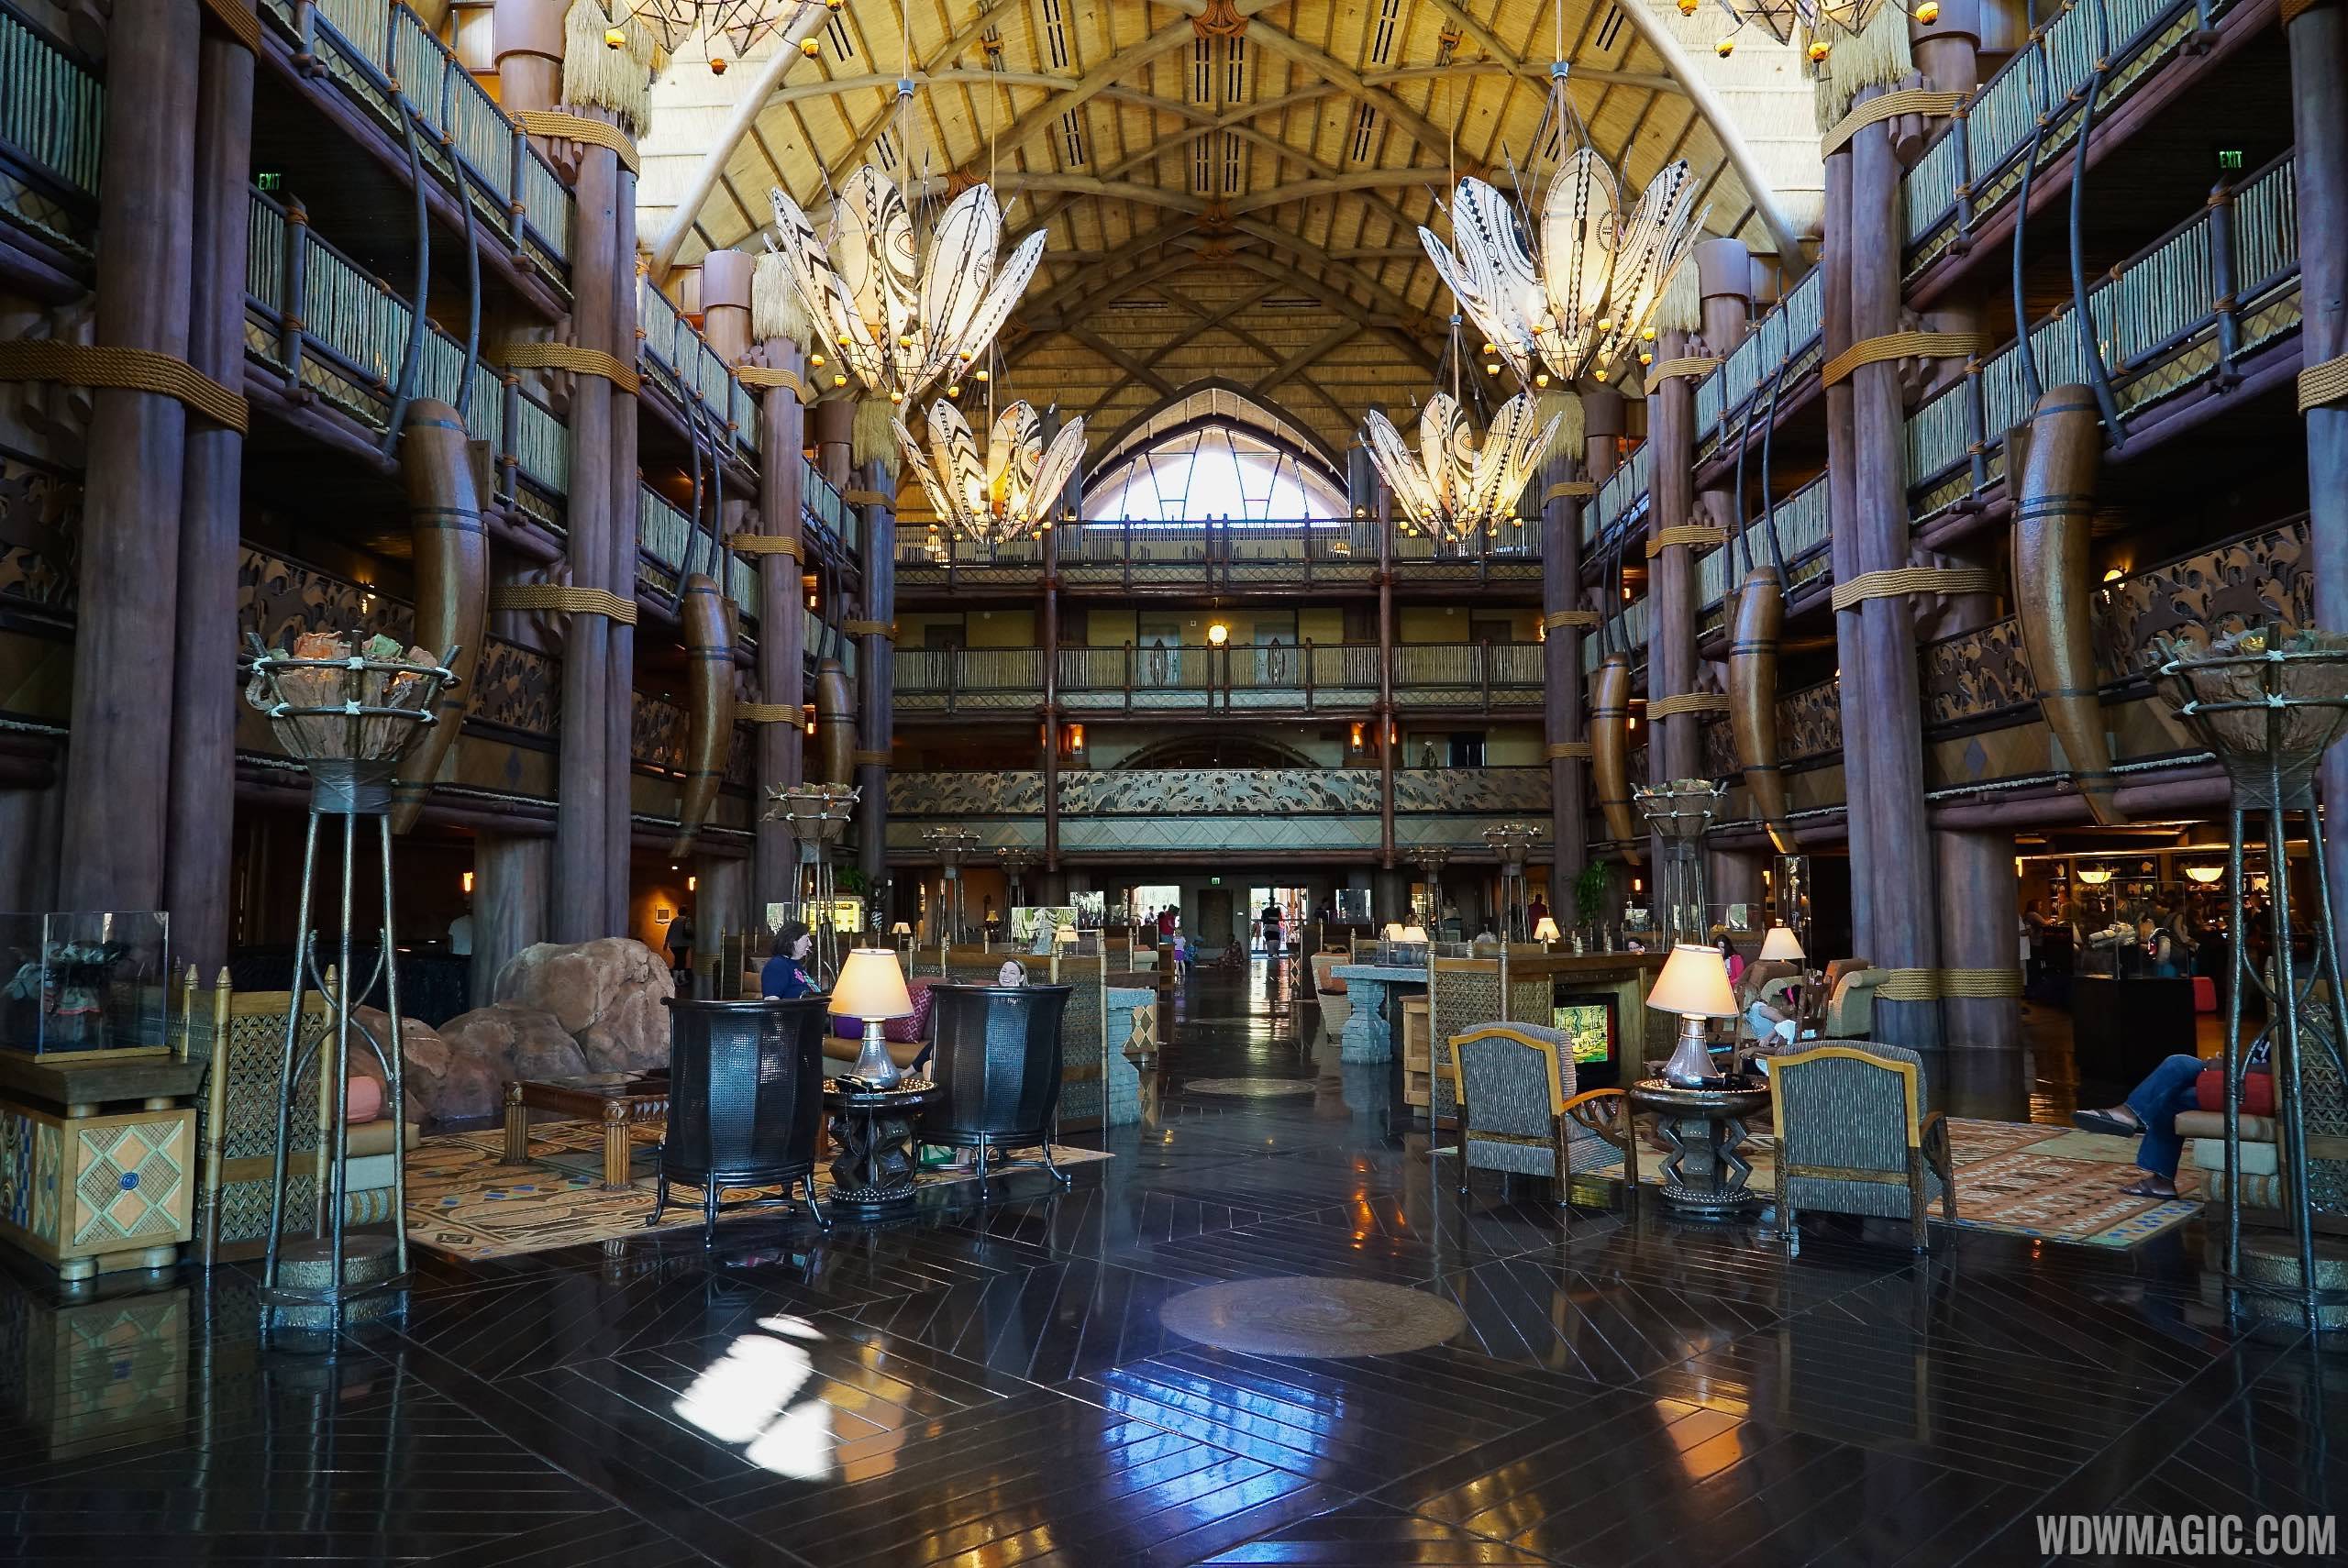 The main lobby at Disney's Animal Kingdom Lodge